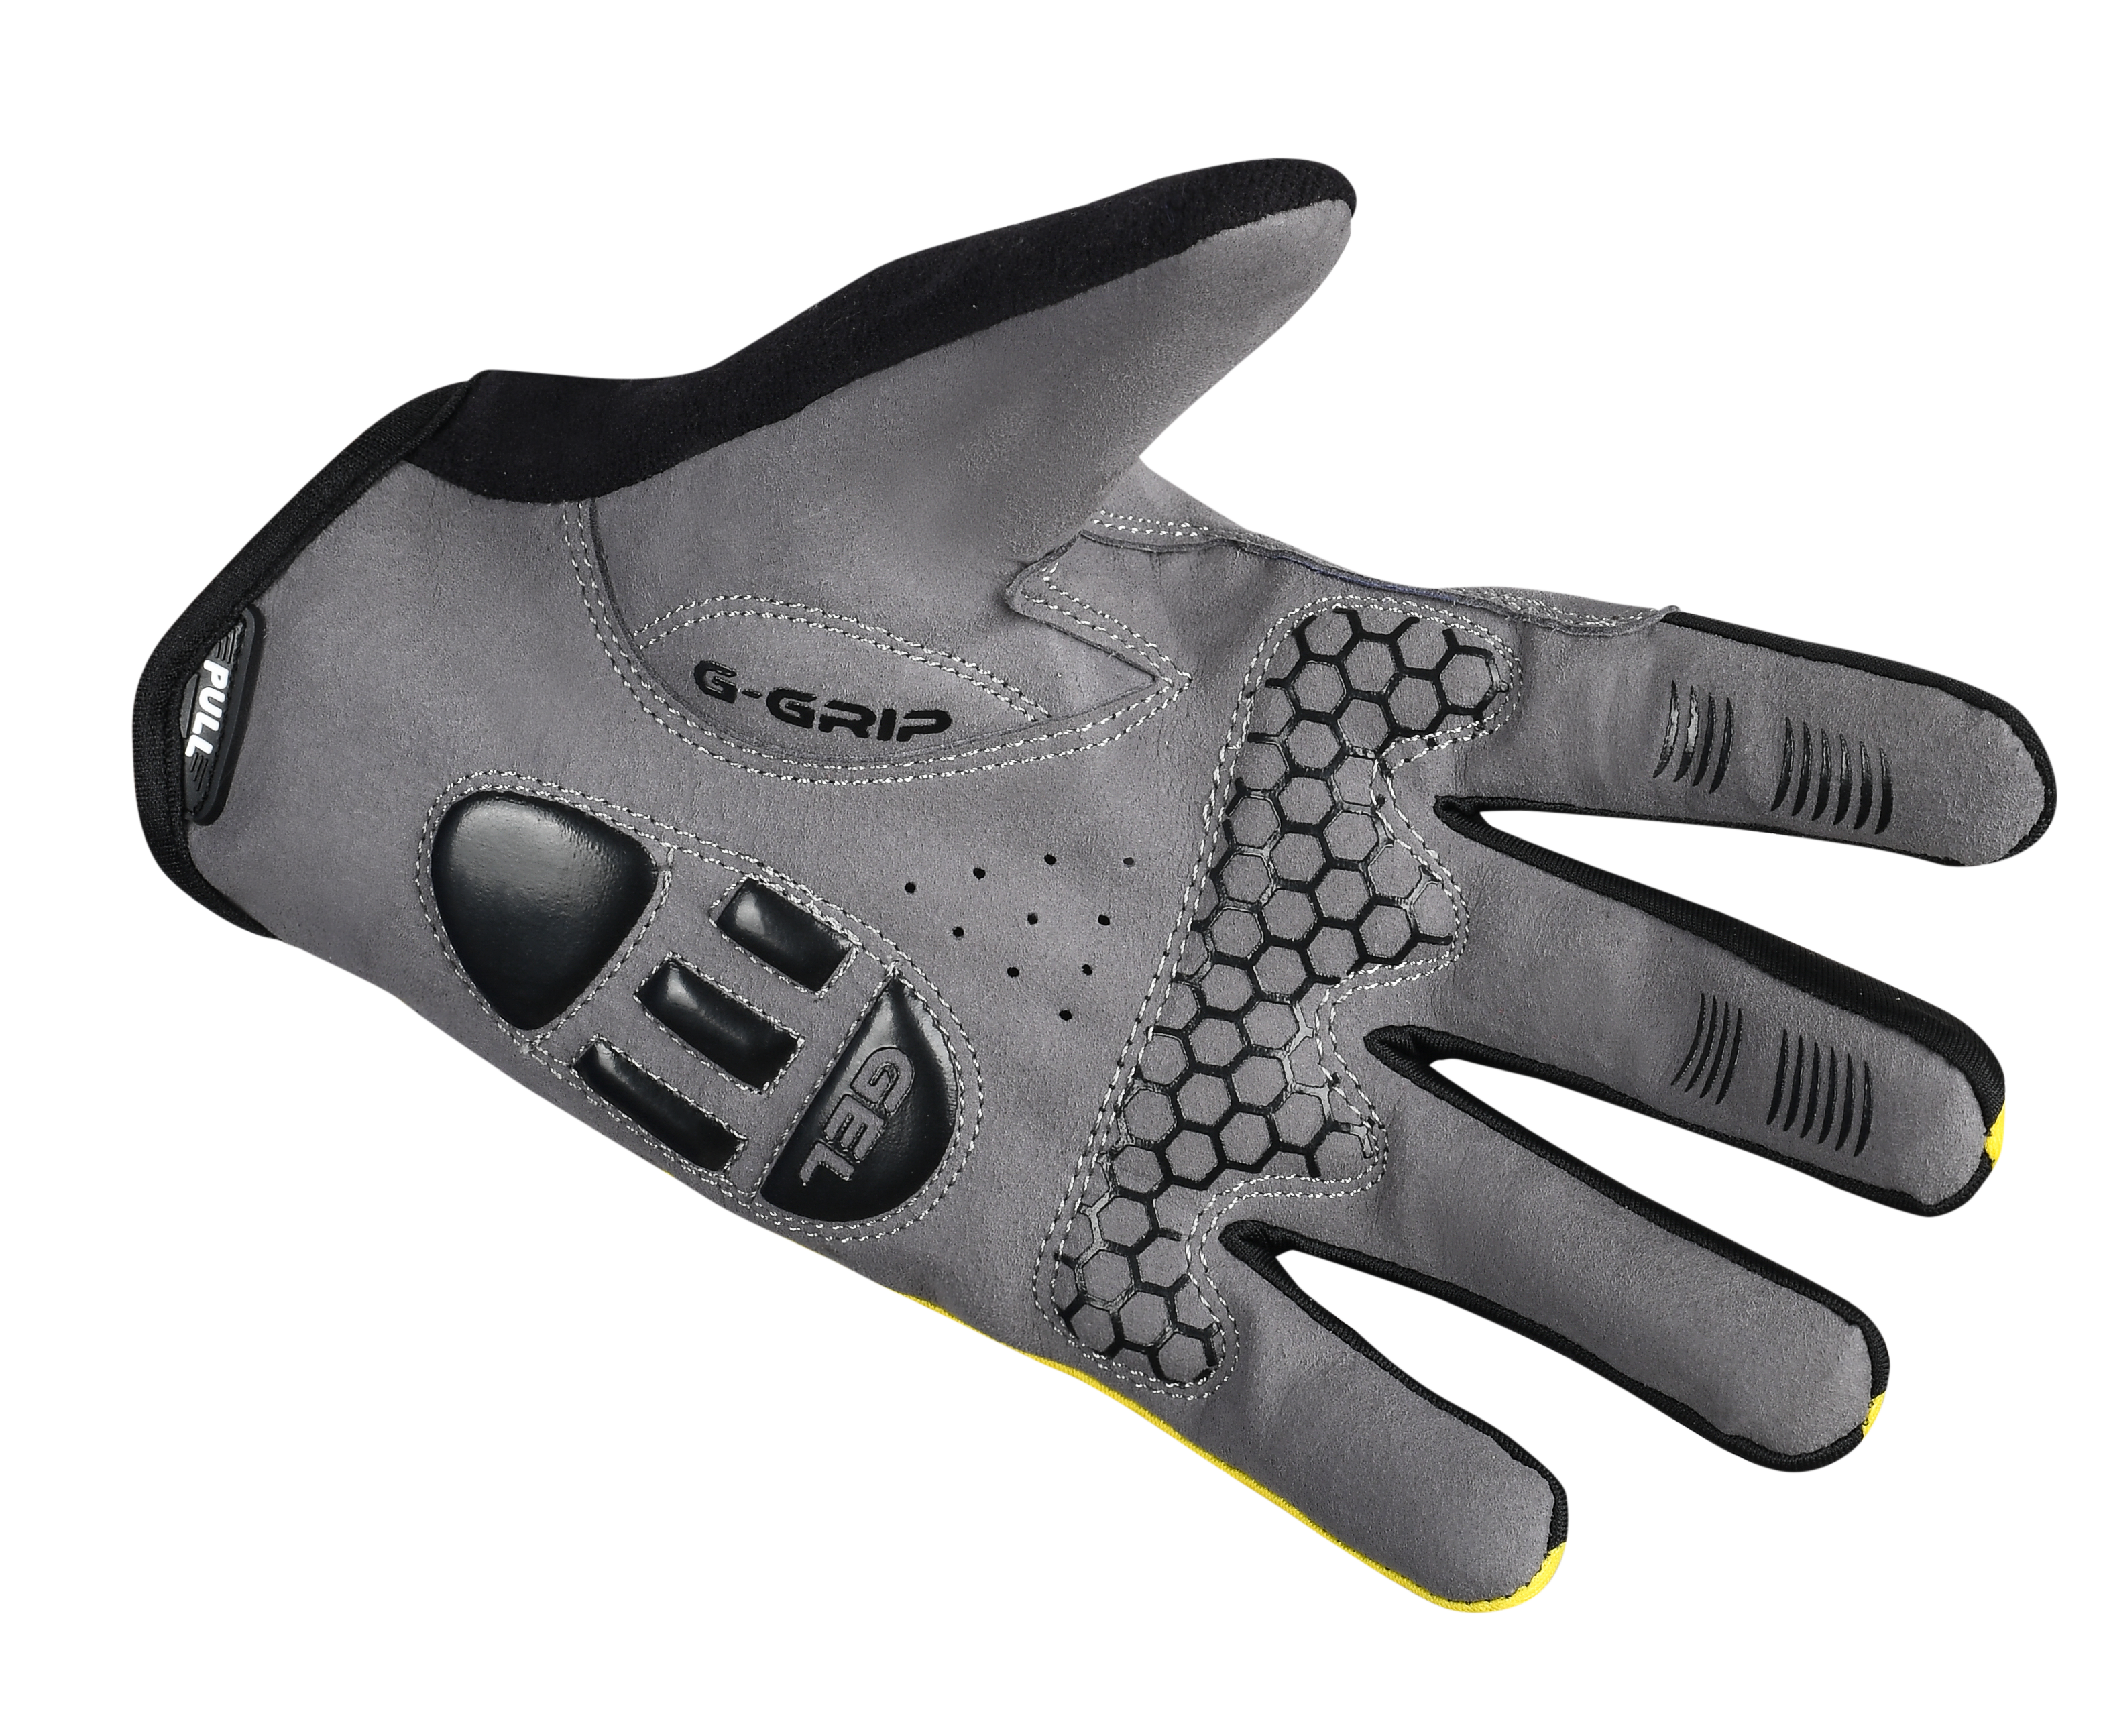 Velocity Full Finger Summer Winter Gel Padded Cycling Glove